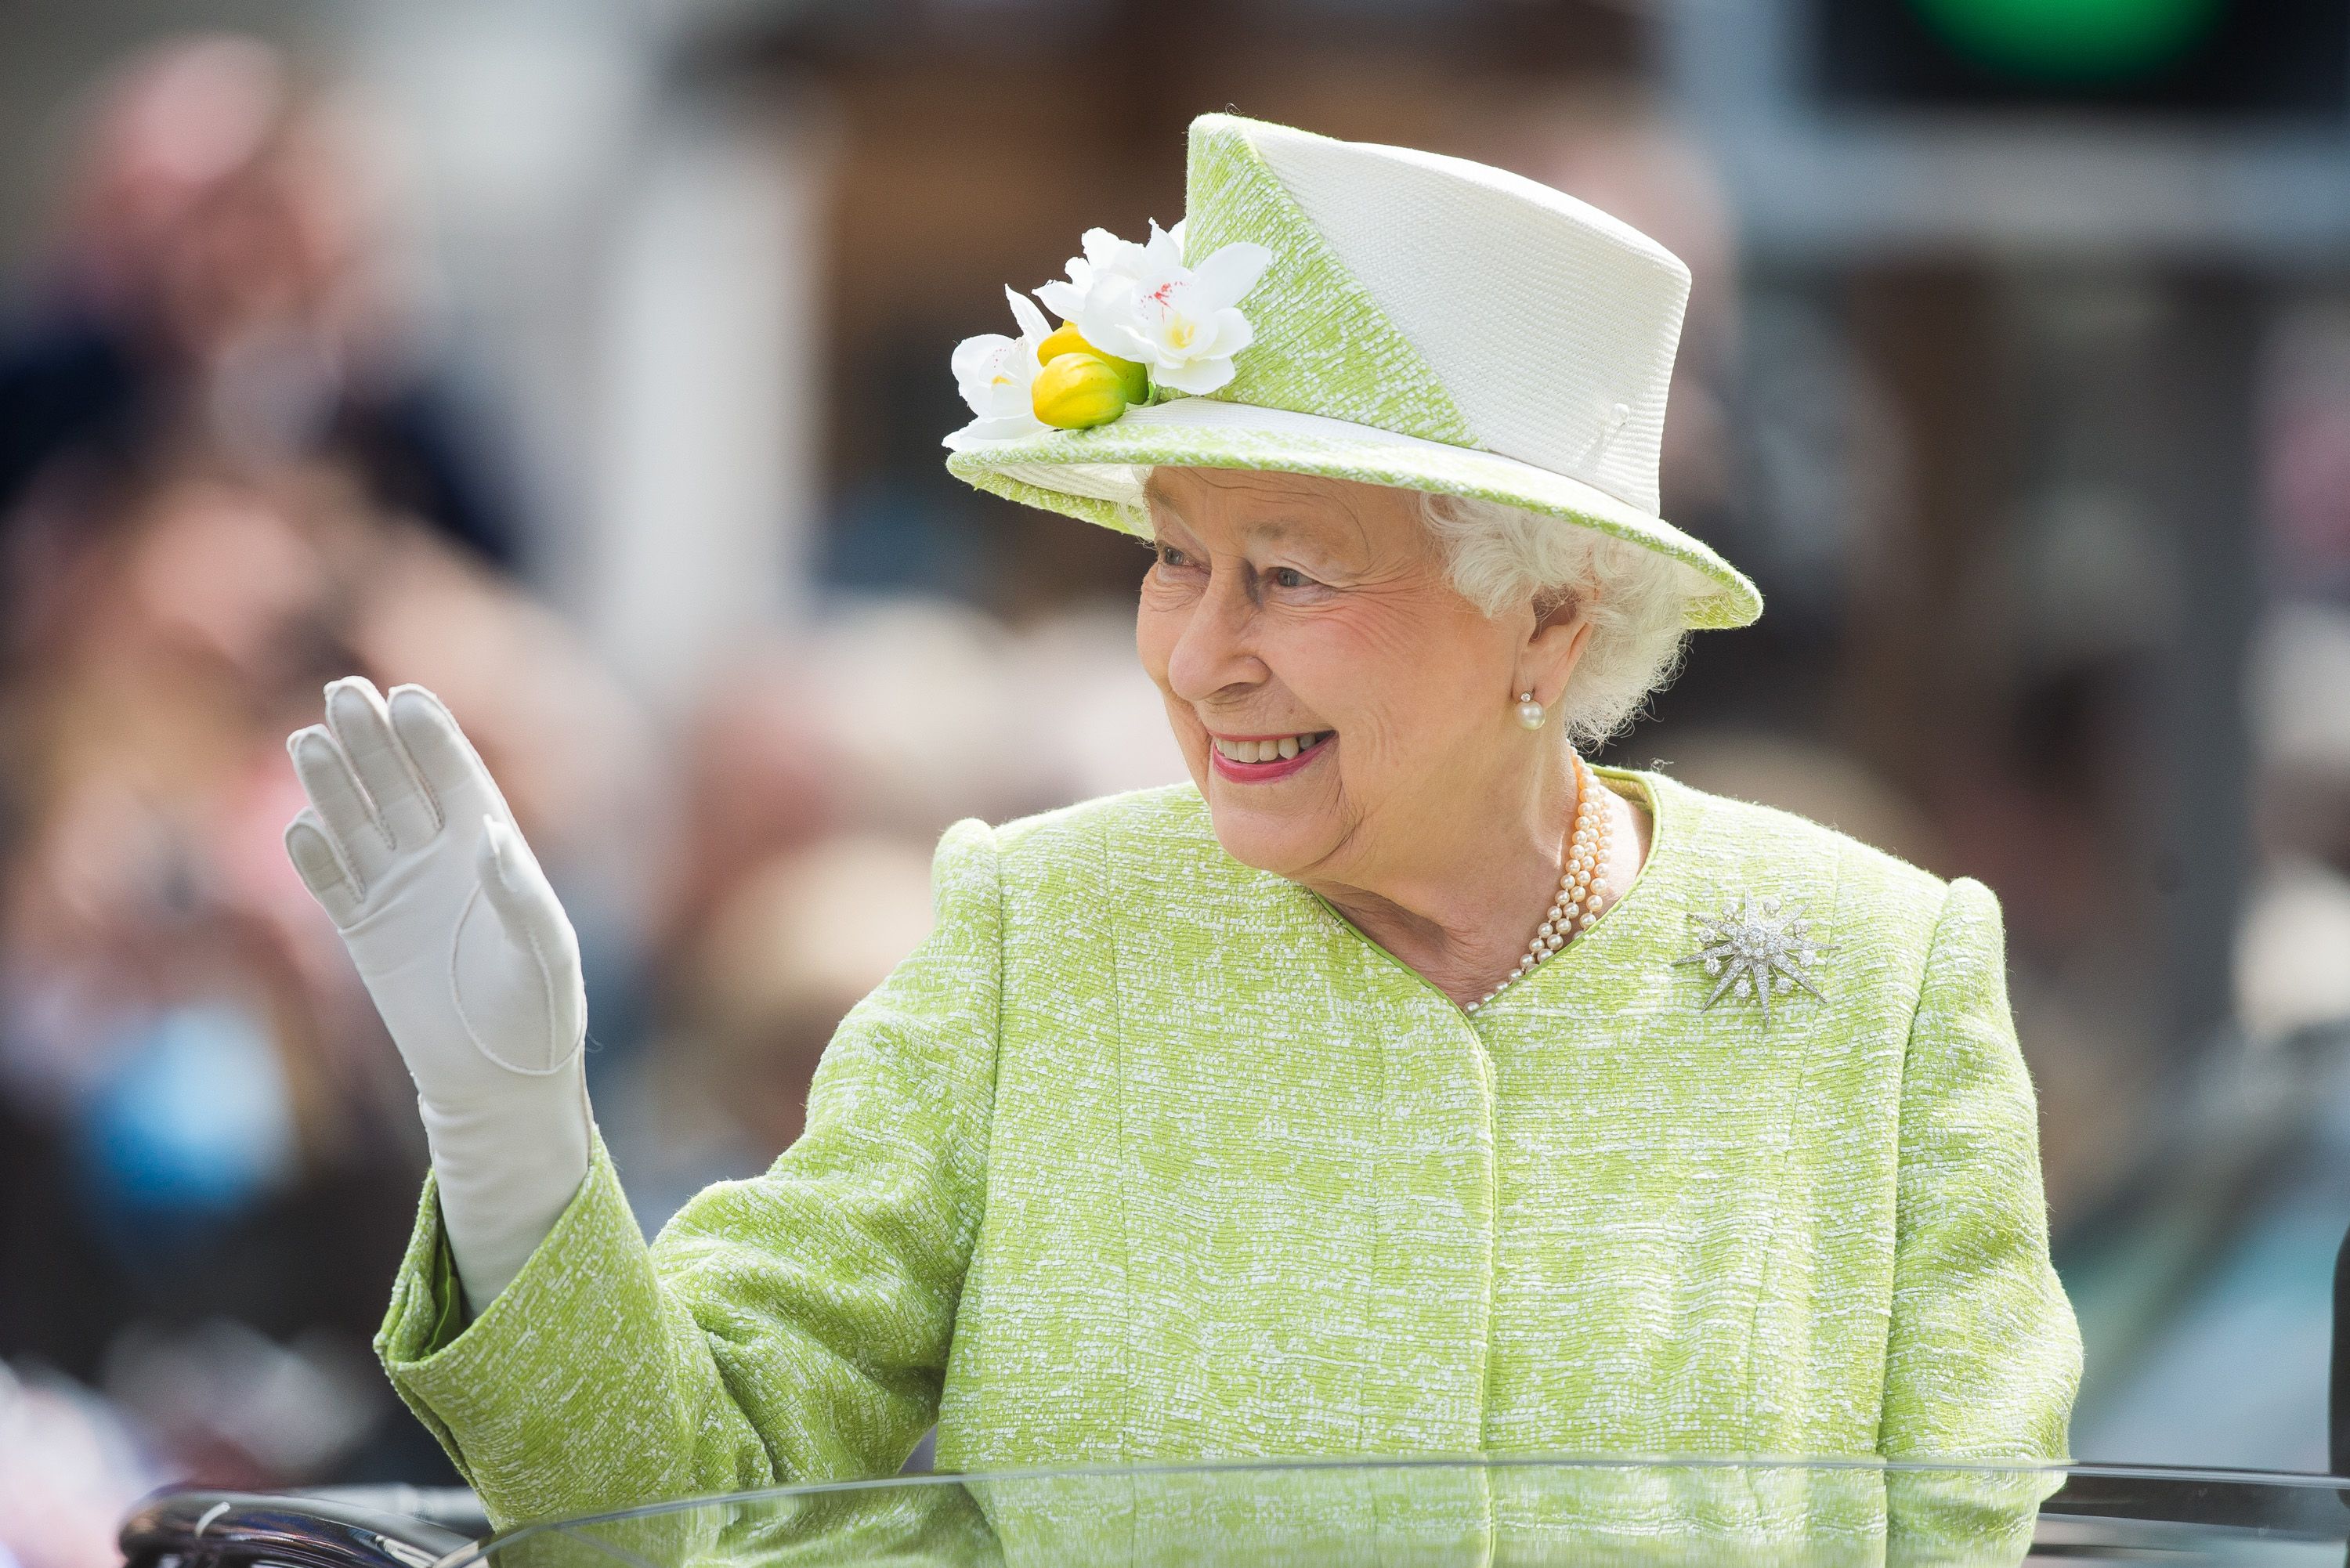 Queen Elizabeth waving her hand wearing pastel green outfit